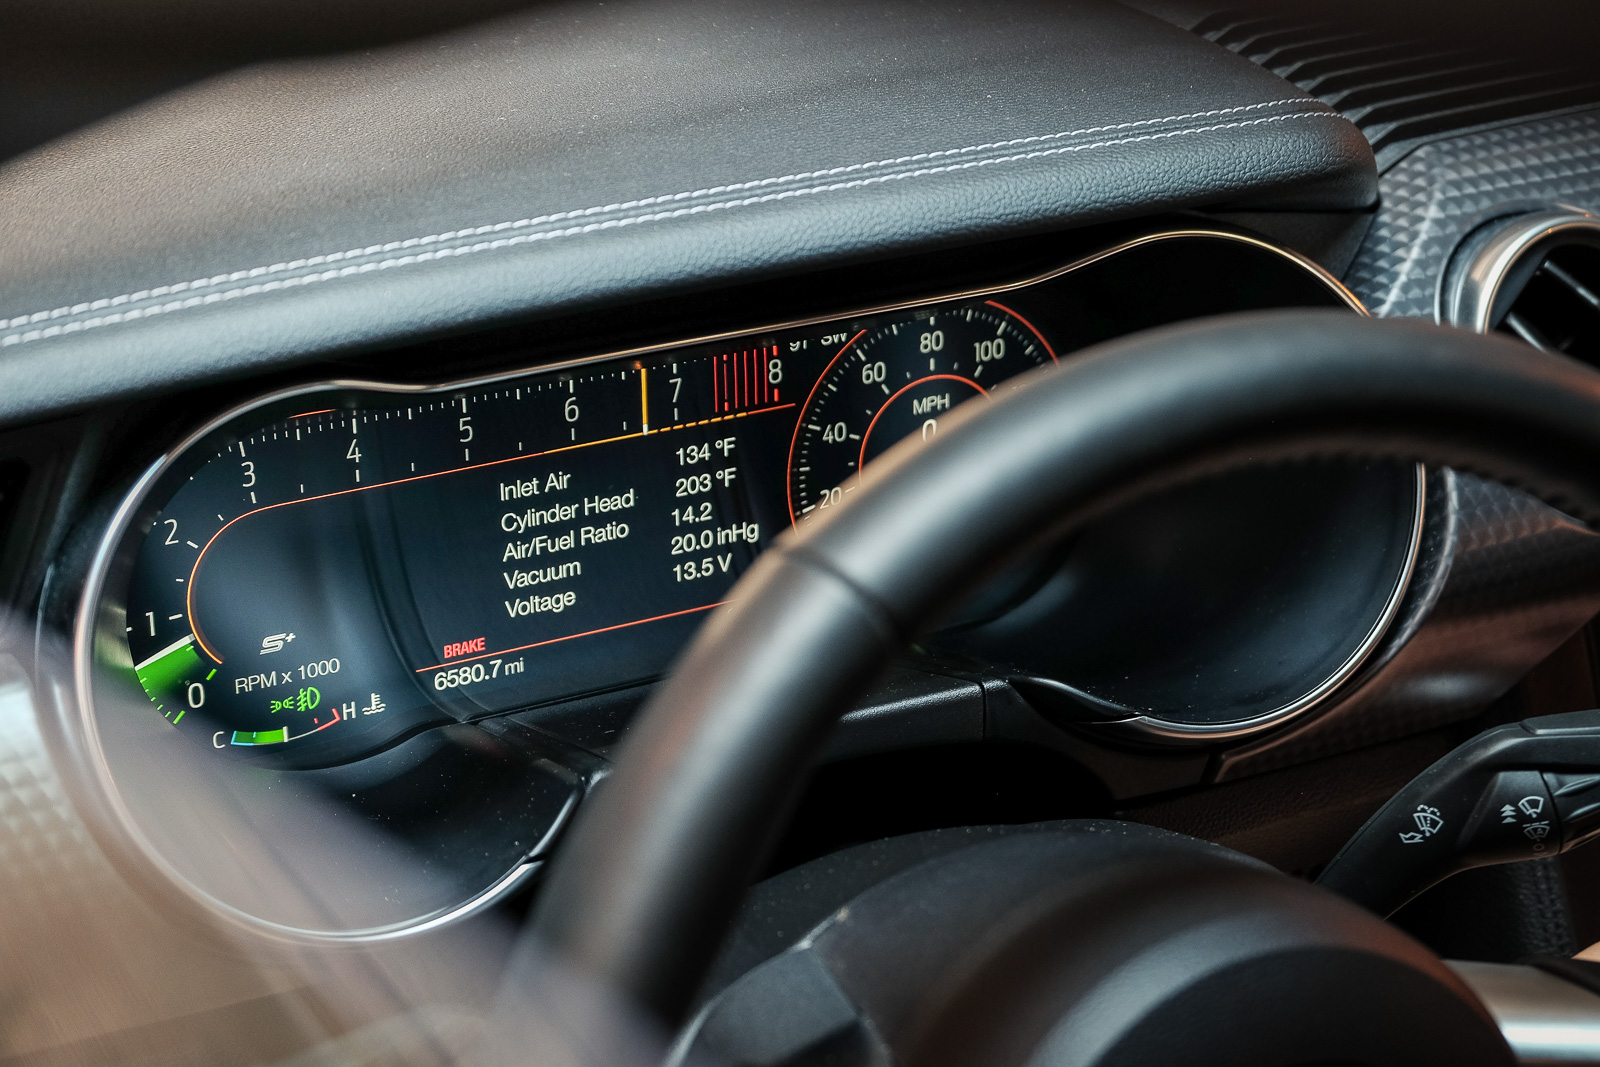 2018 Ford Mustang GT interior